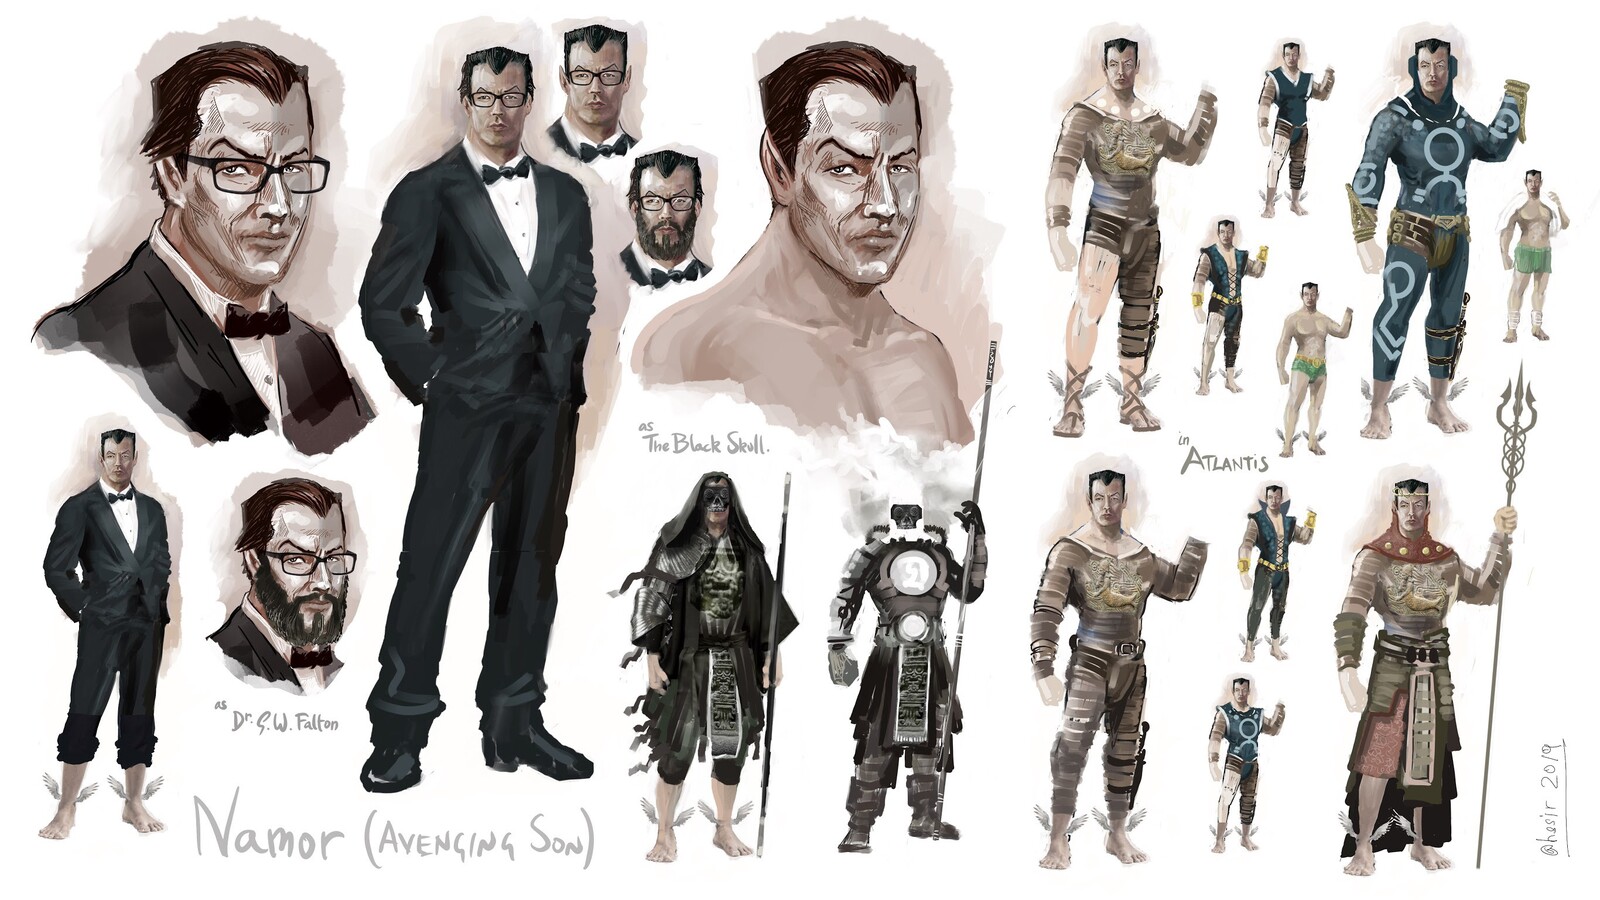 Namor character Designs... Various Atlantean, surface and vigilante costume options. 